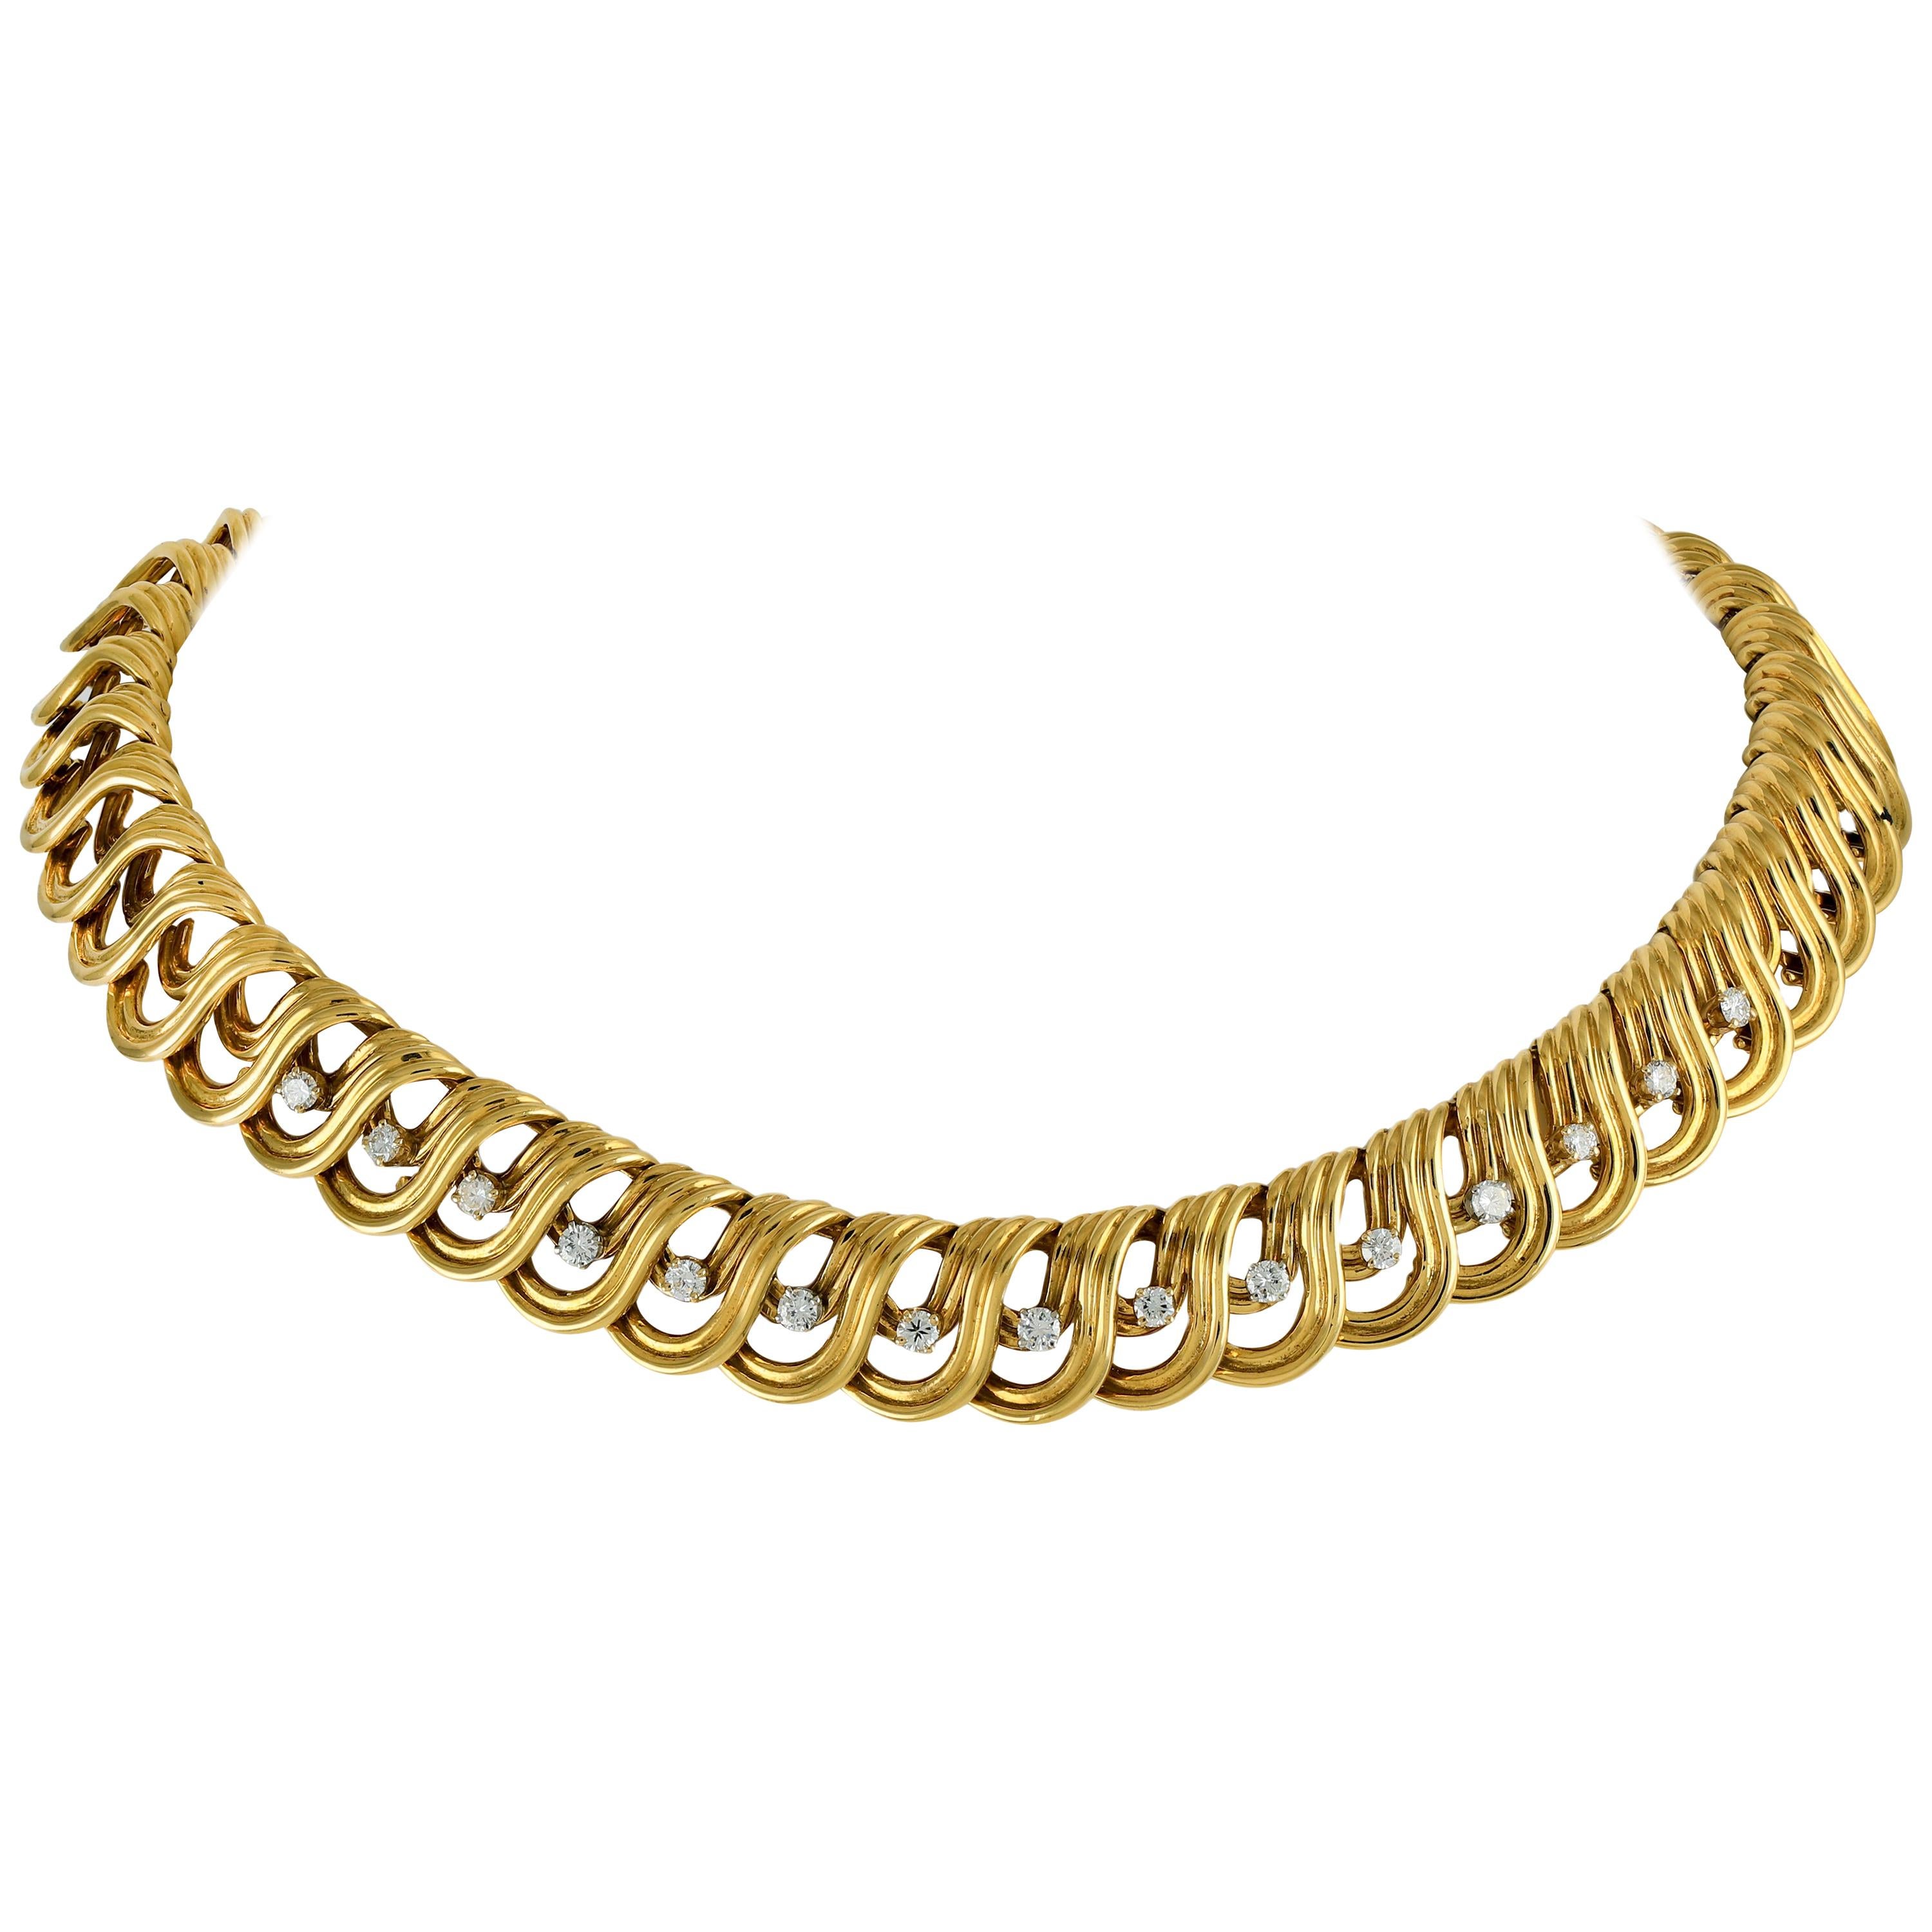 Solid 18 Karat Gold Link and 1.50 Carat Diamond Collar Necklace